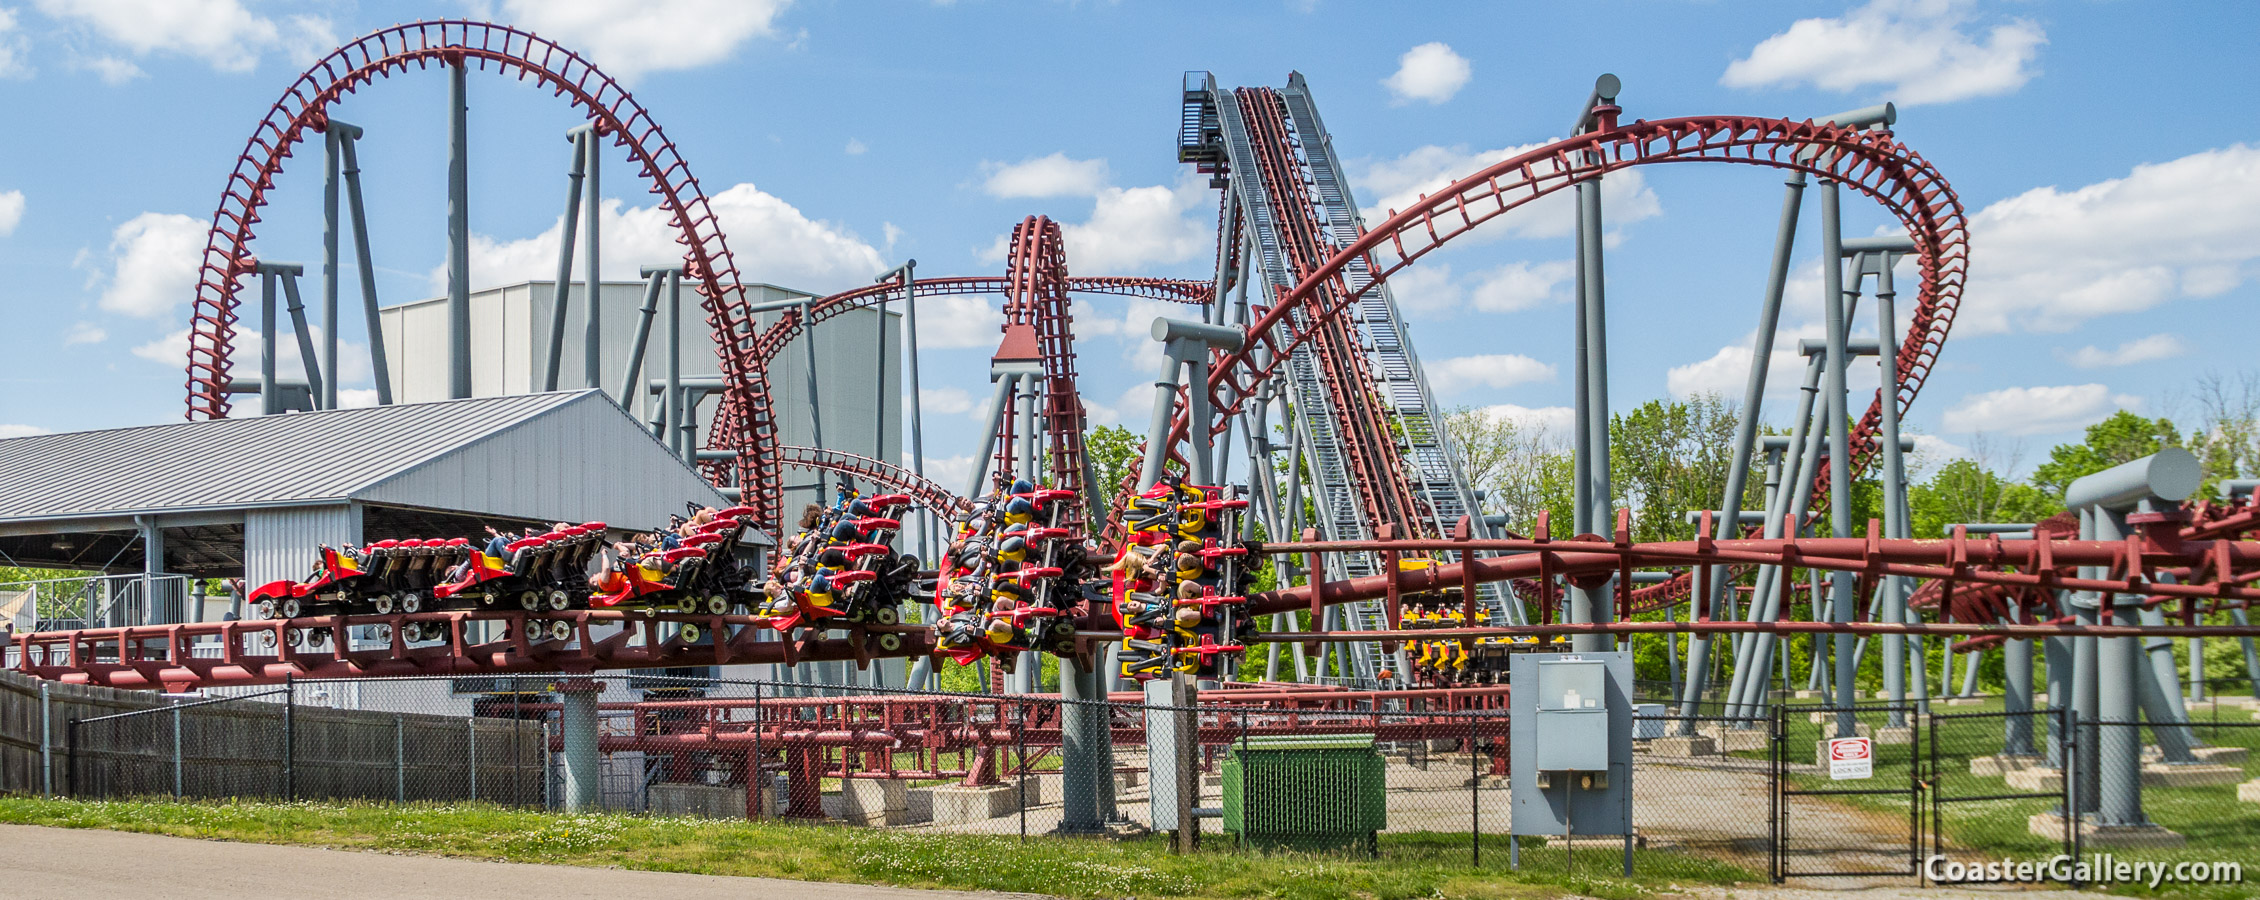 Panorama of the Firehawk roller coaster